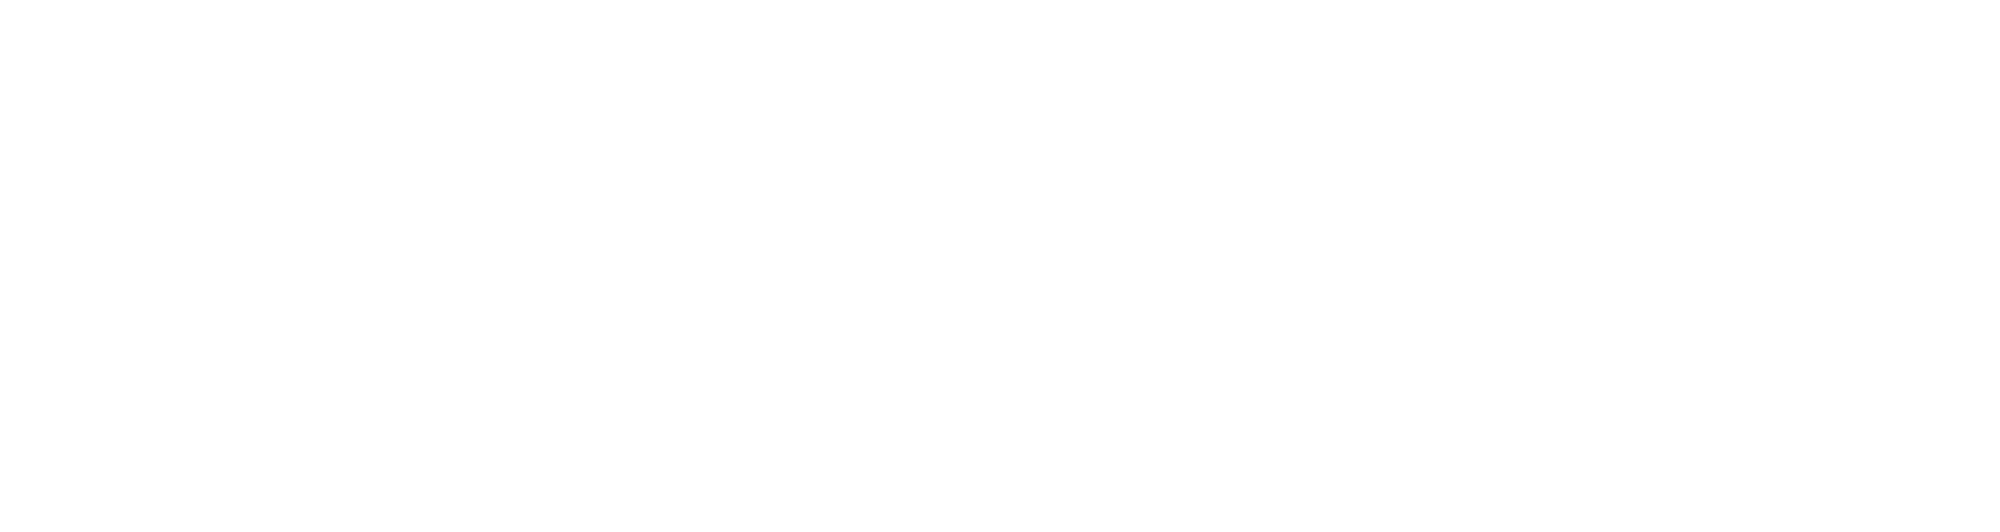 Charles Financial Strategies, LLC Logo